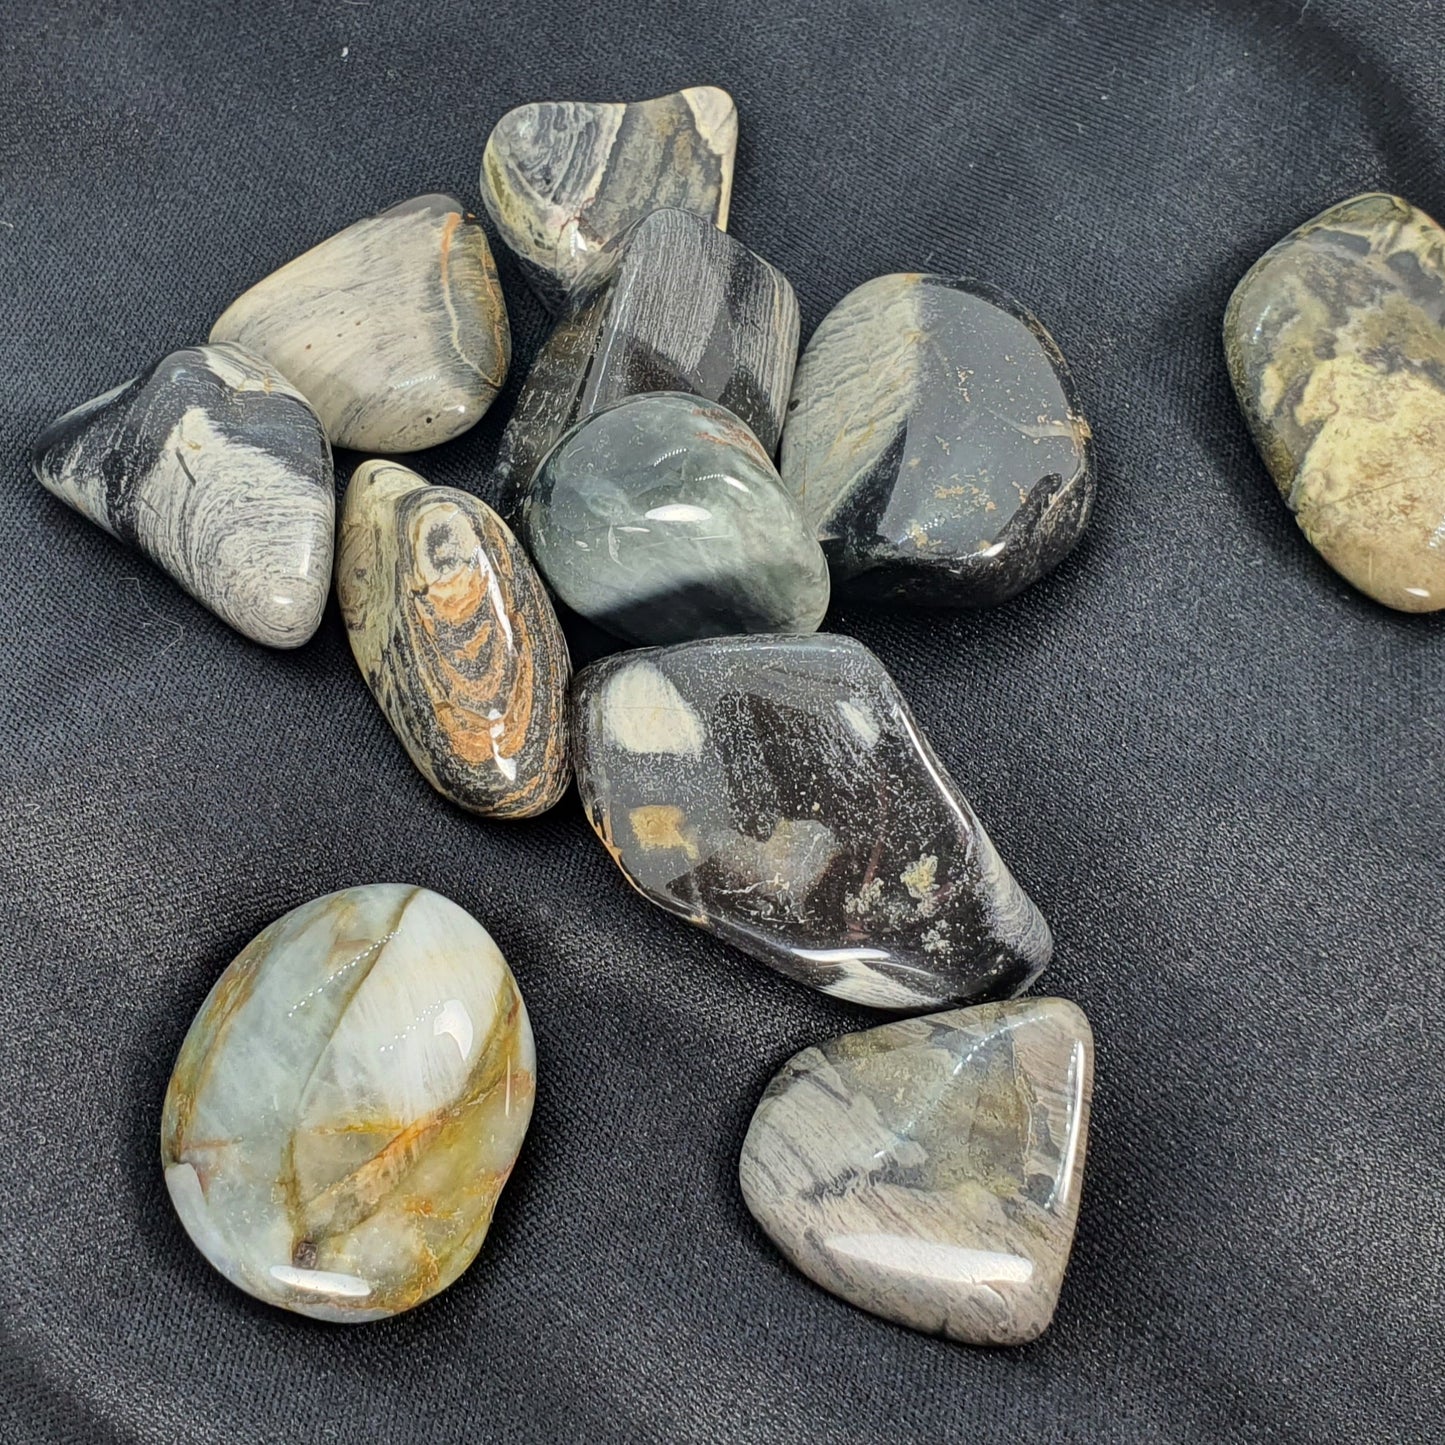 Crystals - Jasper (Silver Leaf) Tumbled Stones